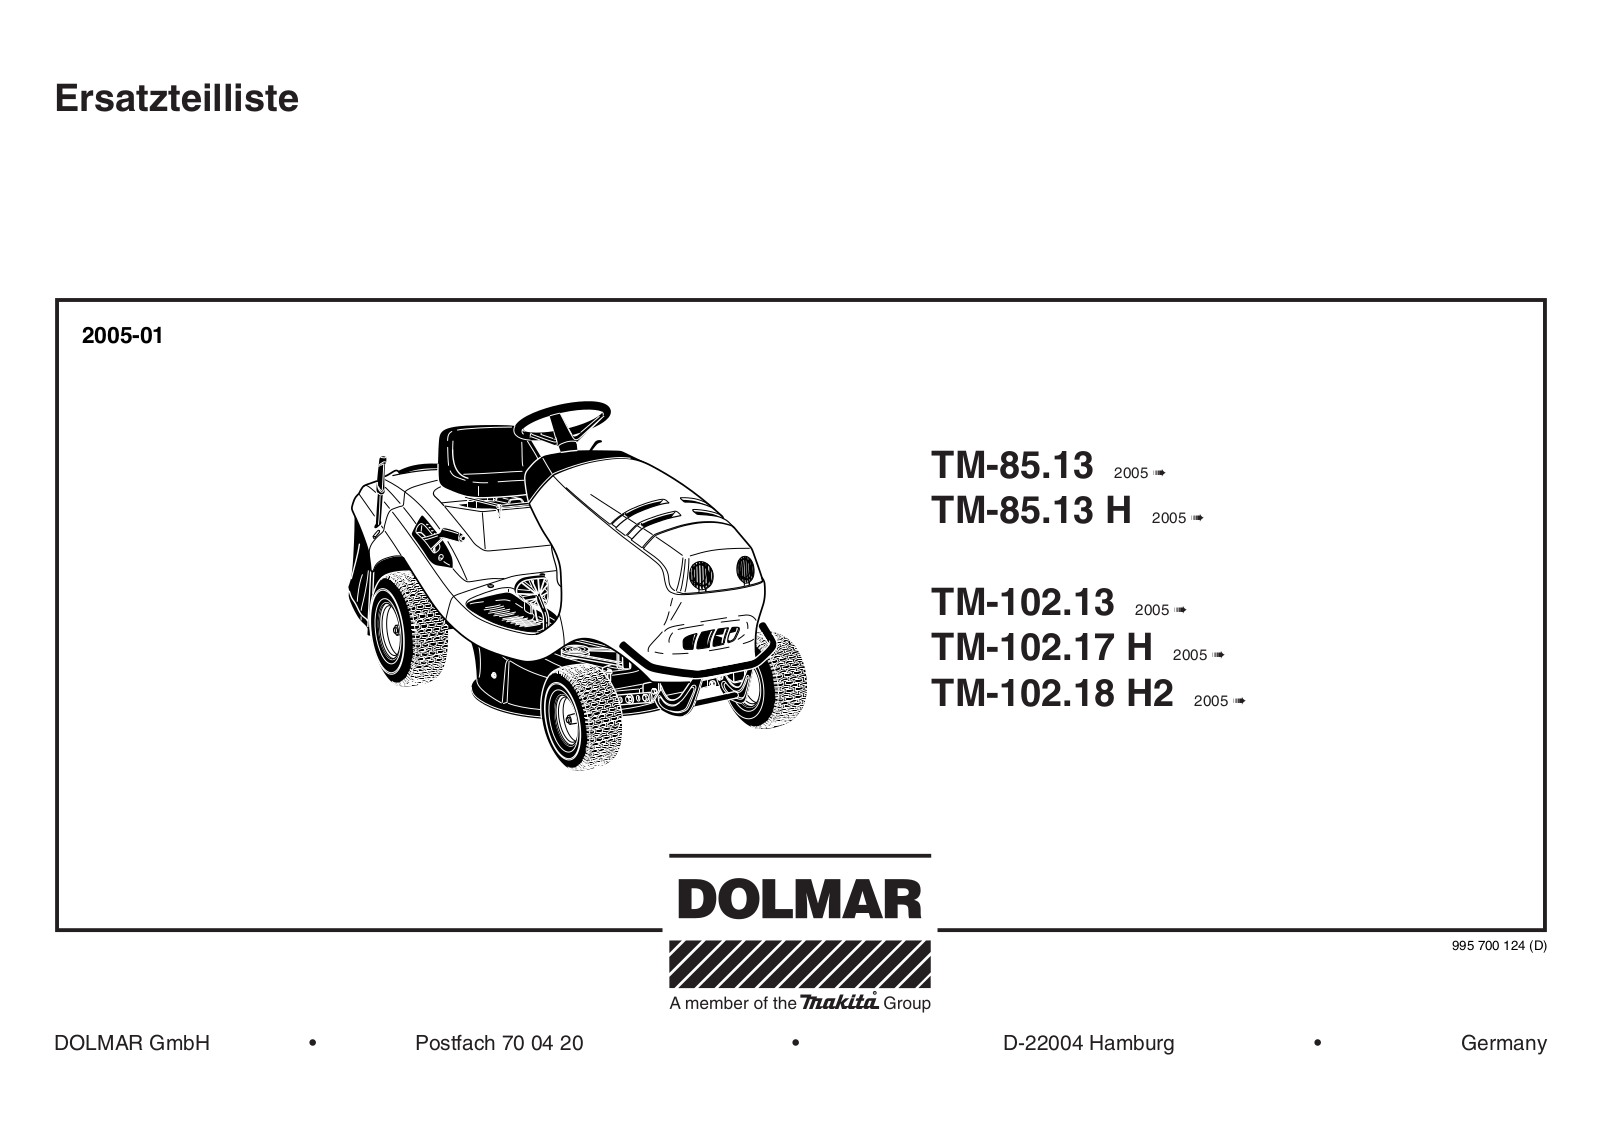 Dolmar TM-102.17 H, TM-85.13, TM-102.18 H2, TM-102.13, TM-85.13 H Spare Parts List